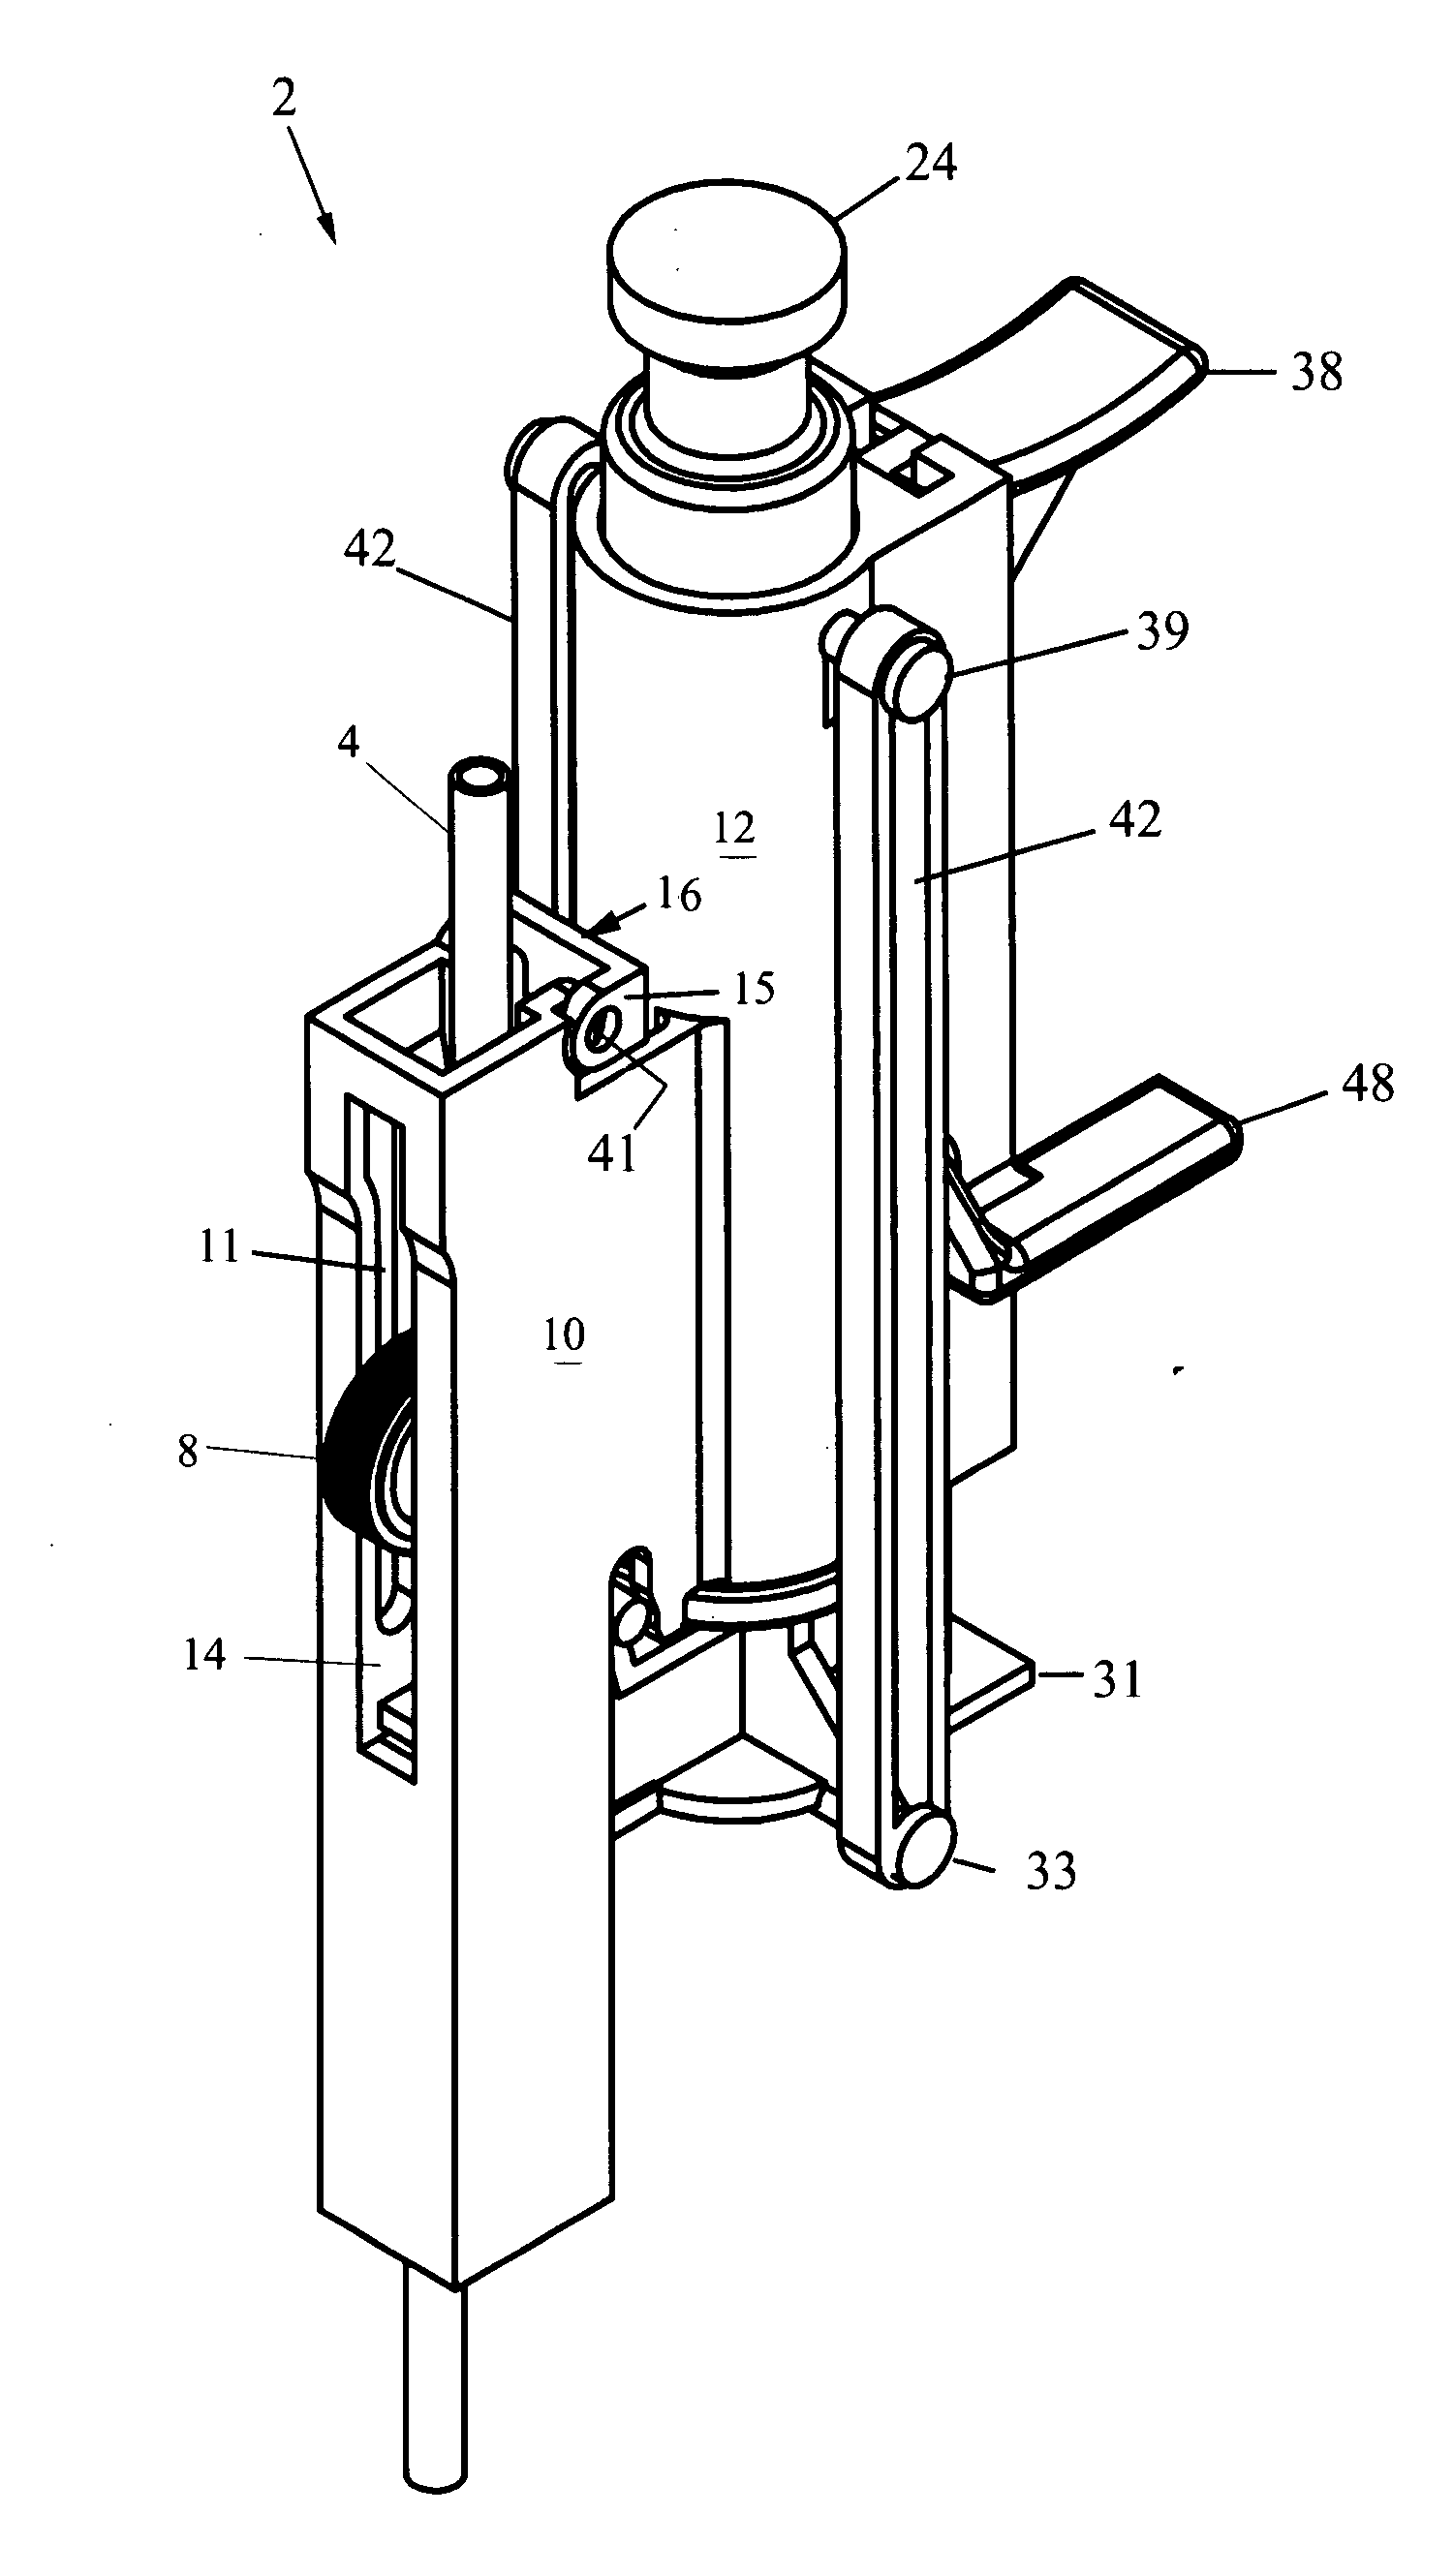 IV regulator with integral flushing mechanism